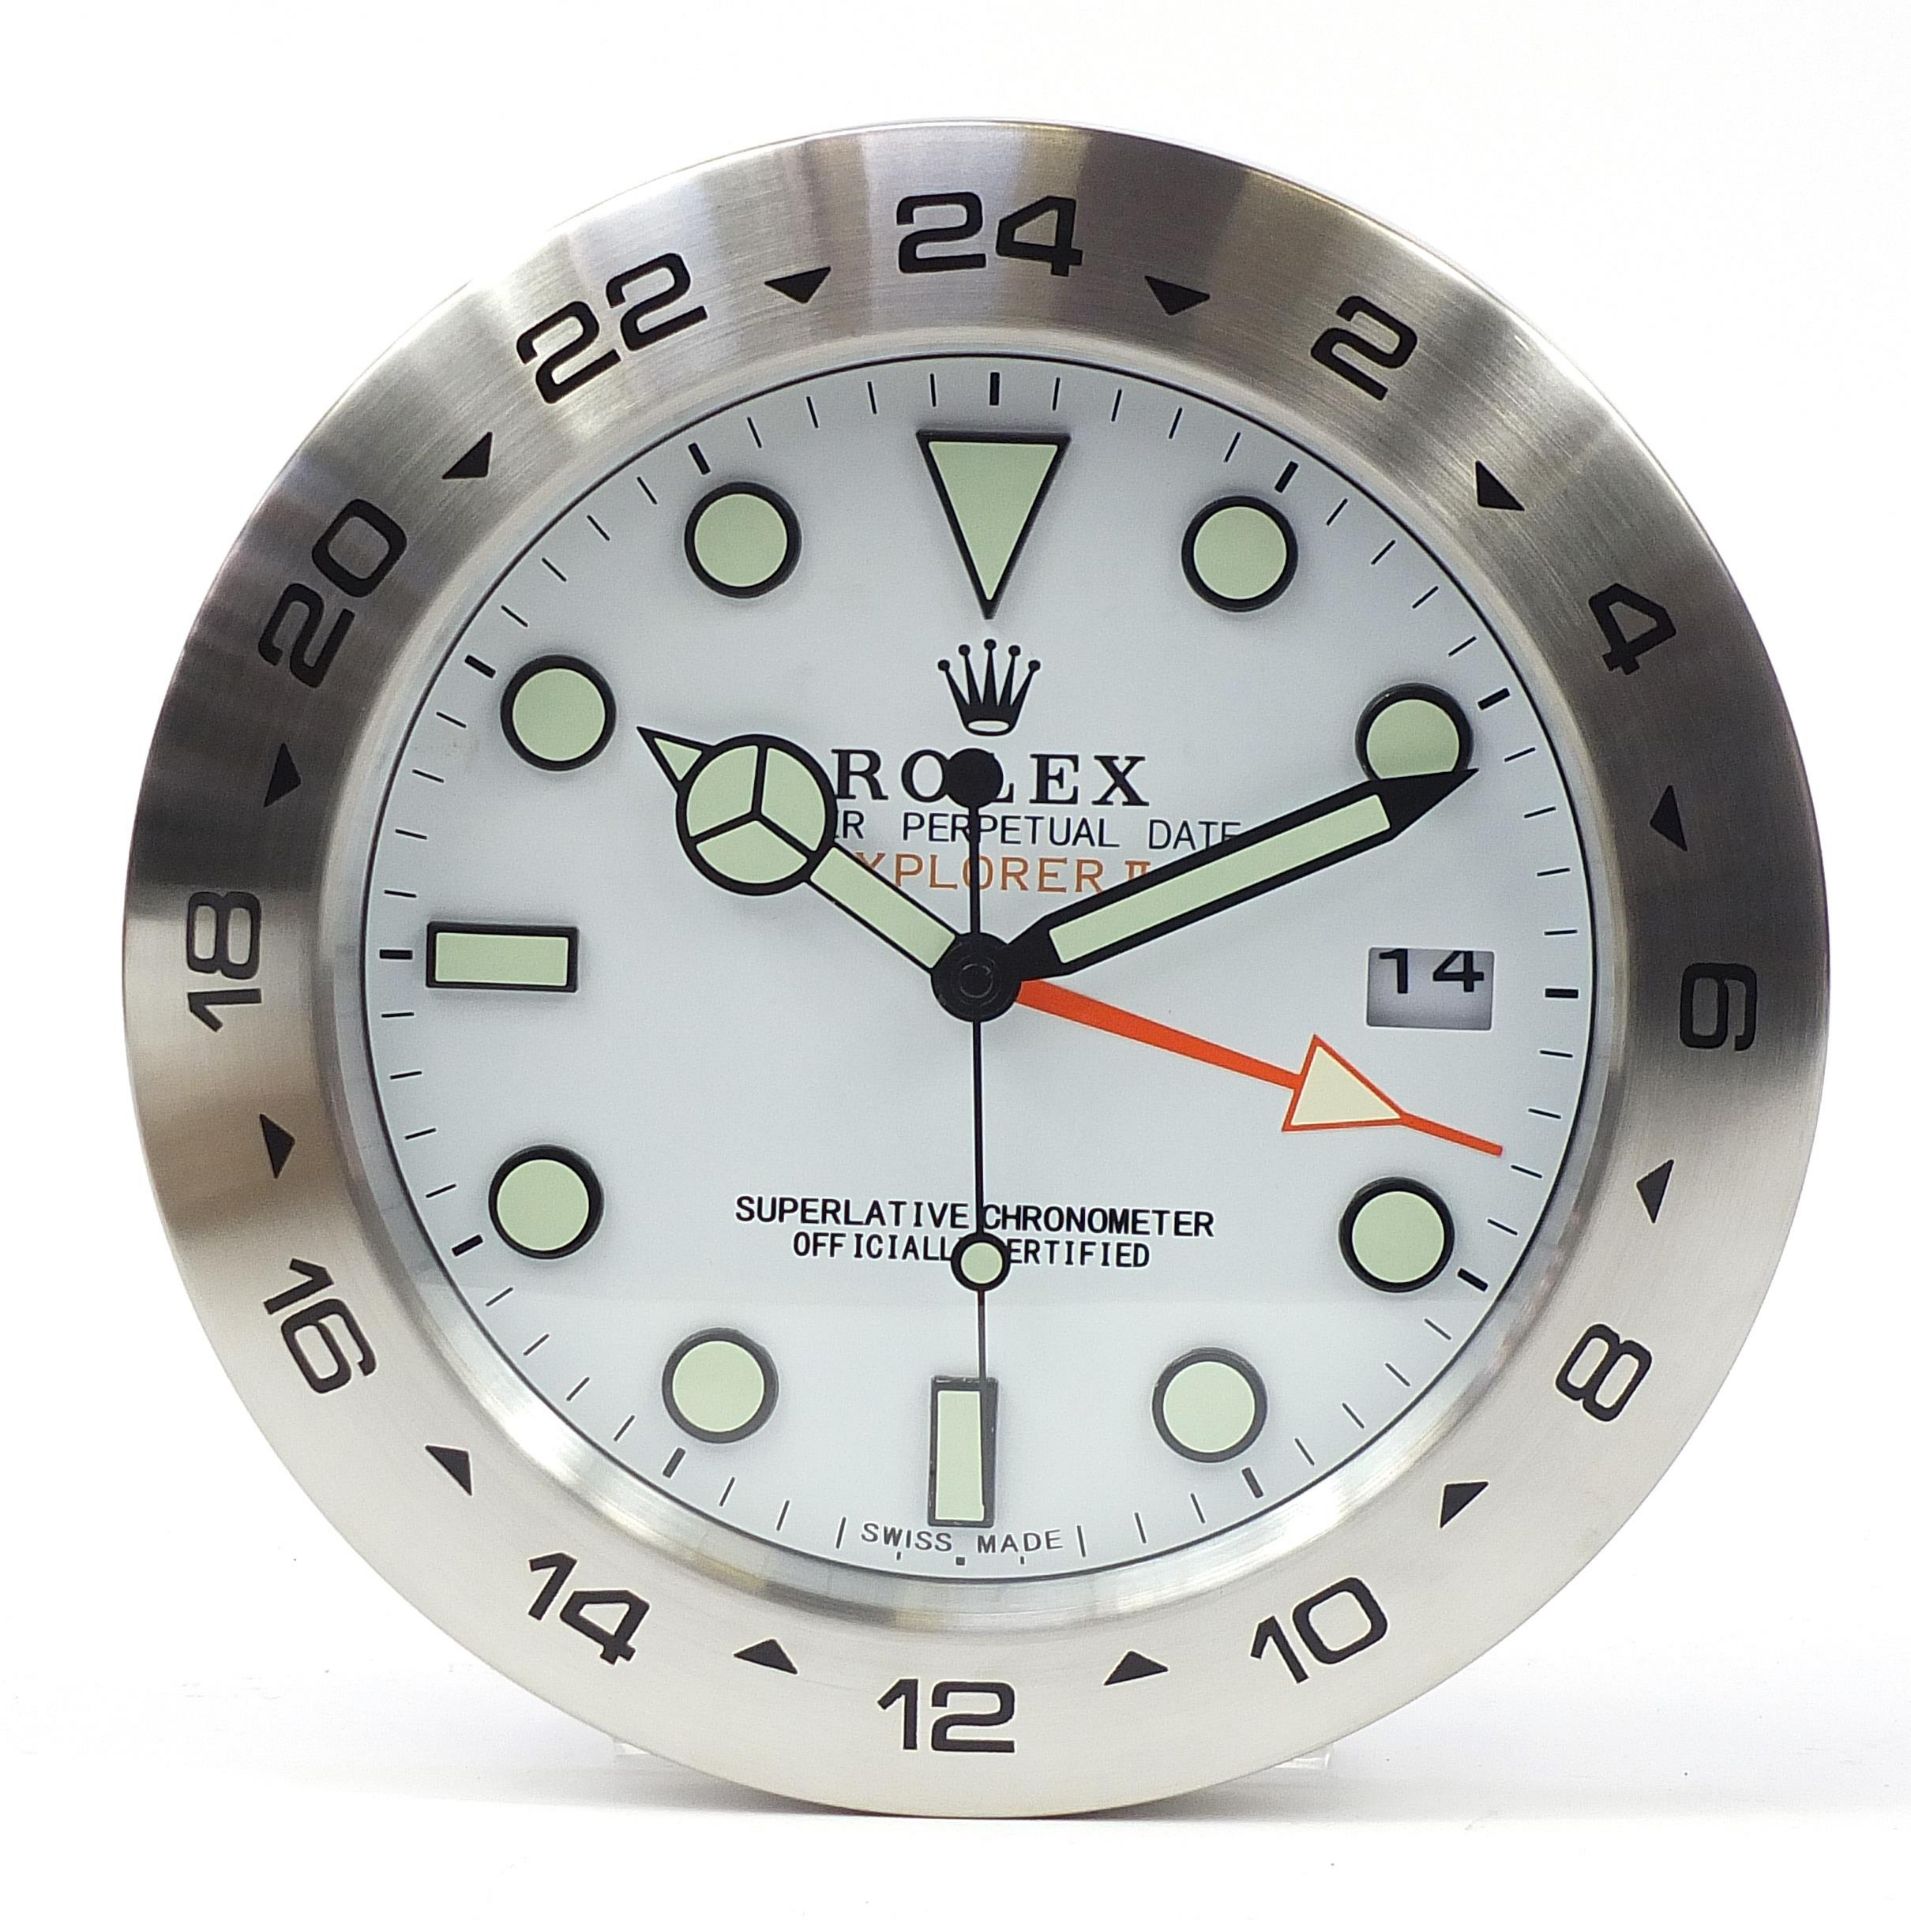 Rolex design dealers display wall clock, 34cm in diameter